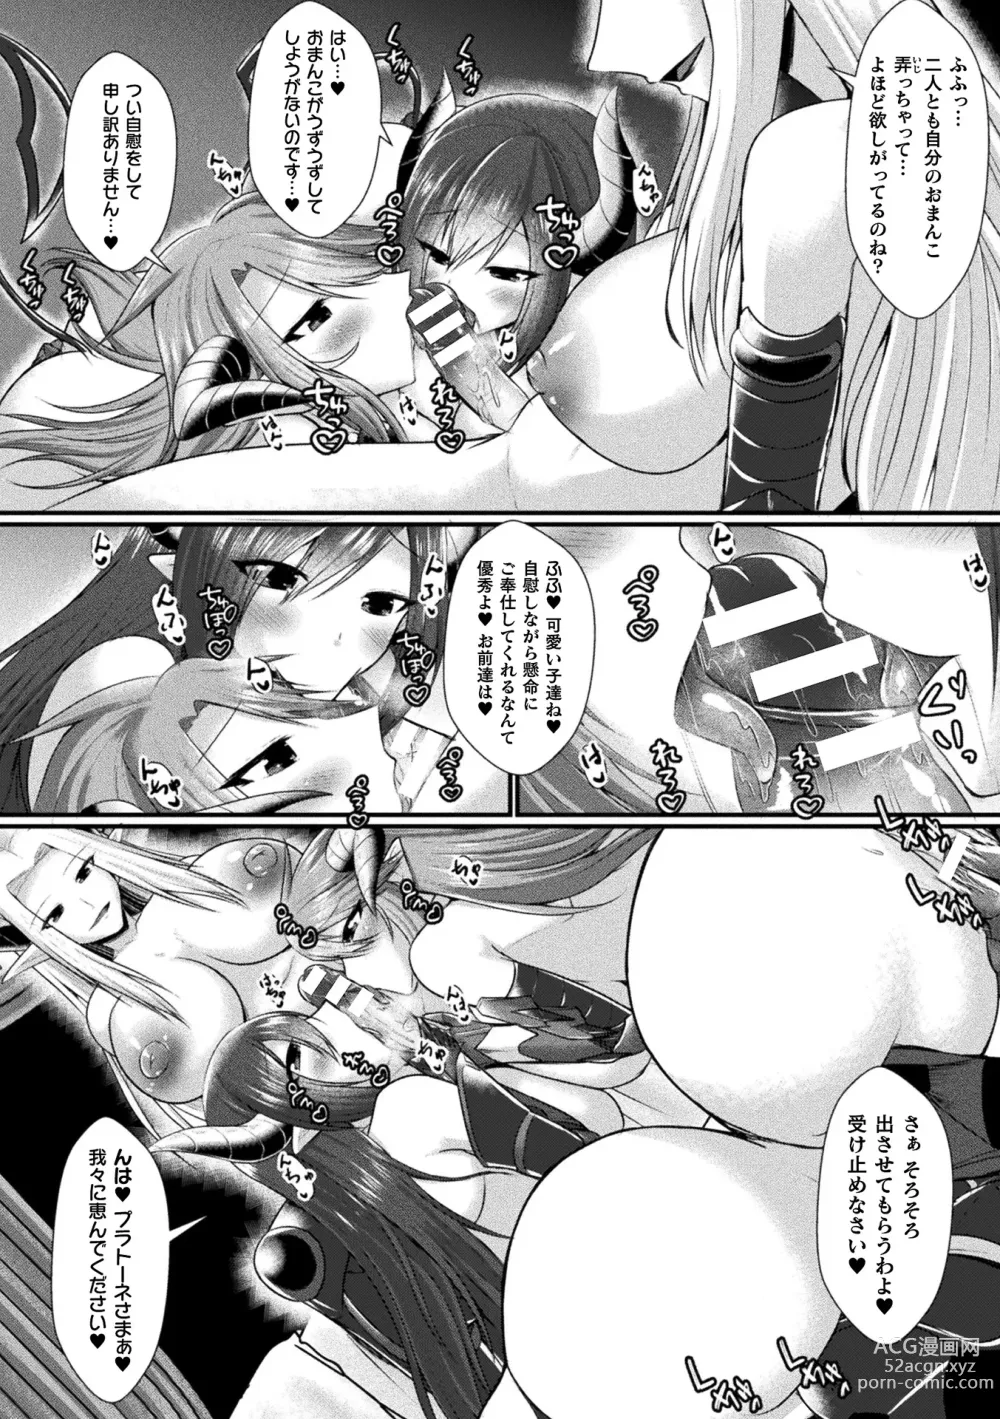 Page 194 of manga Kairaku Dain Desespoir